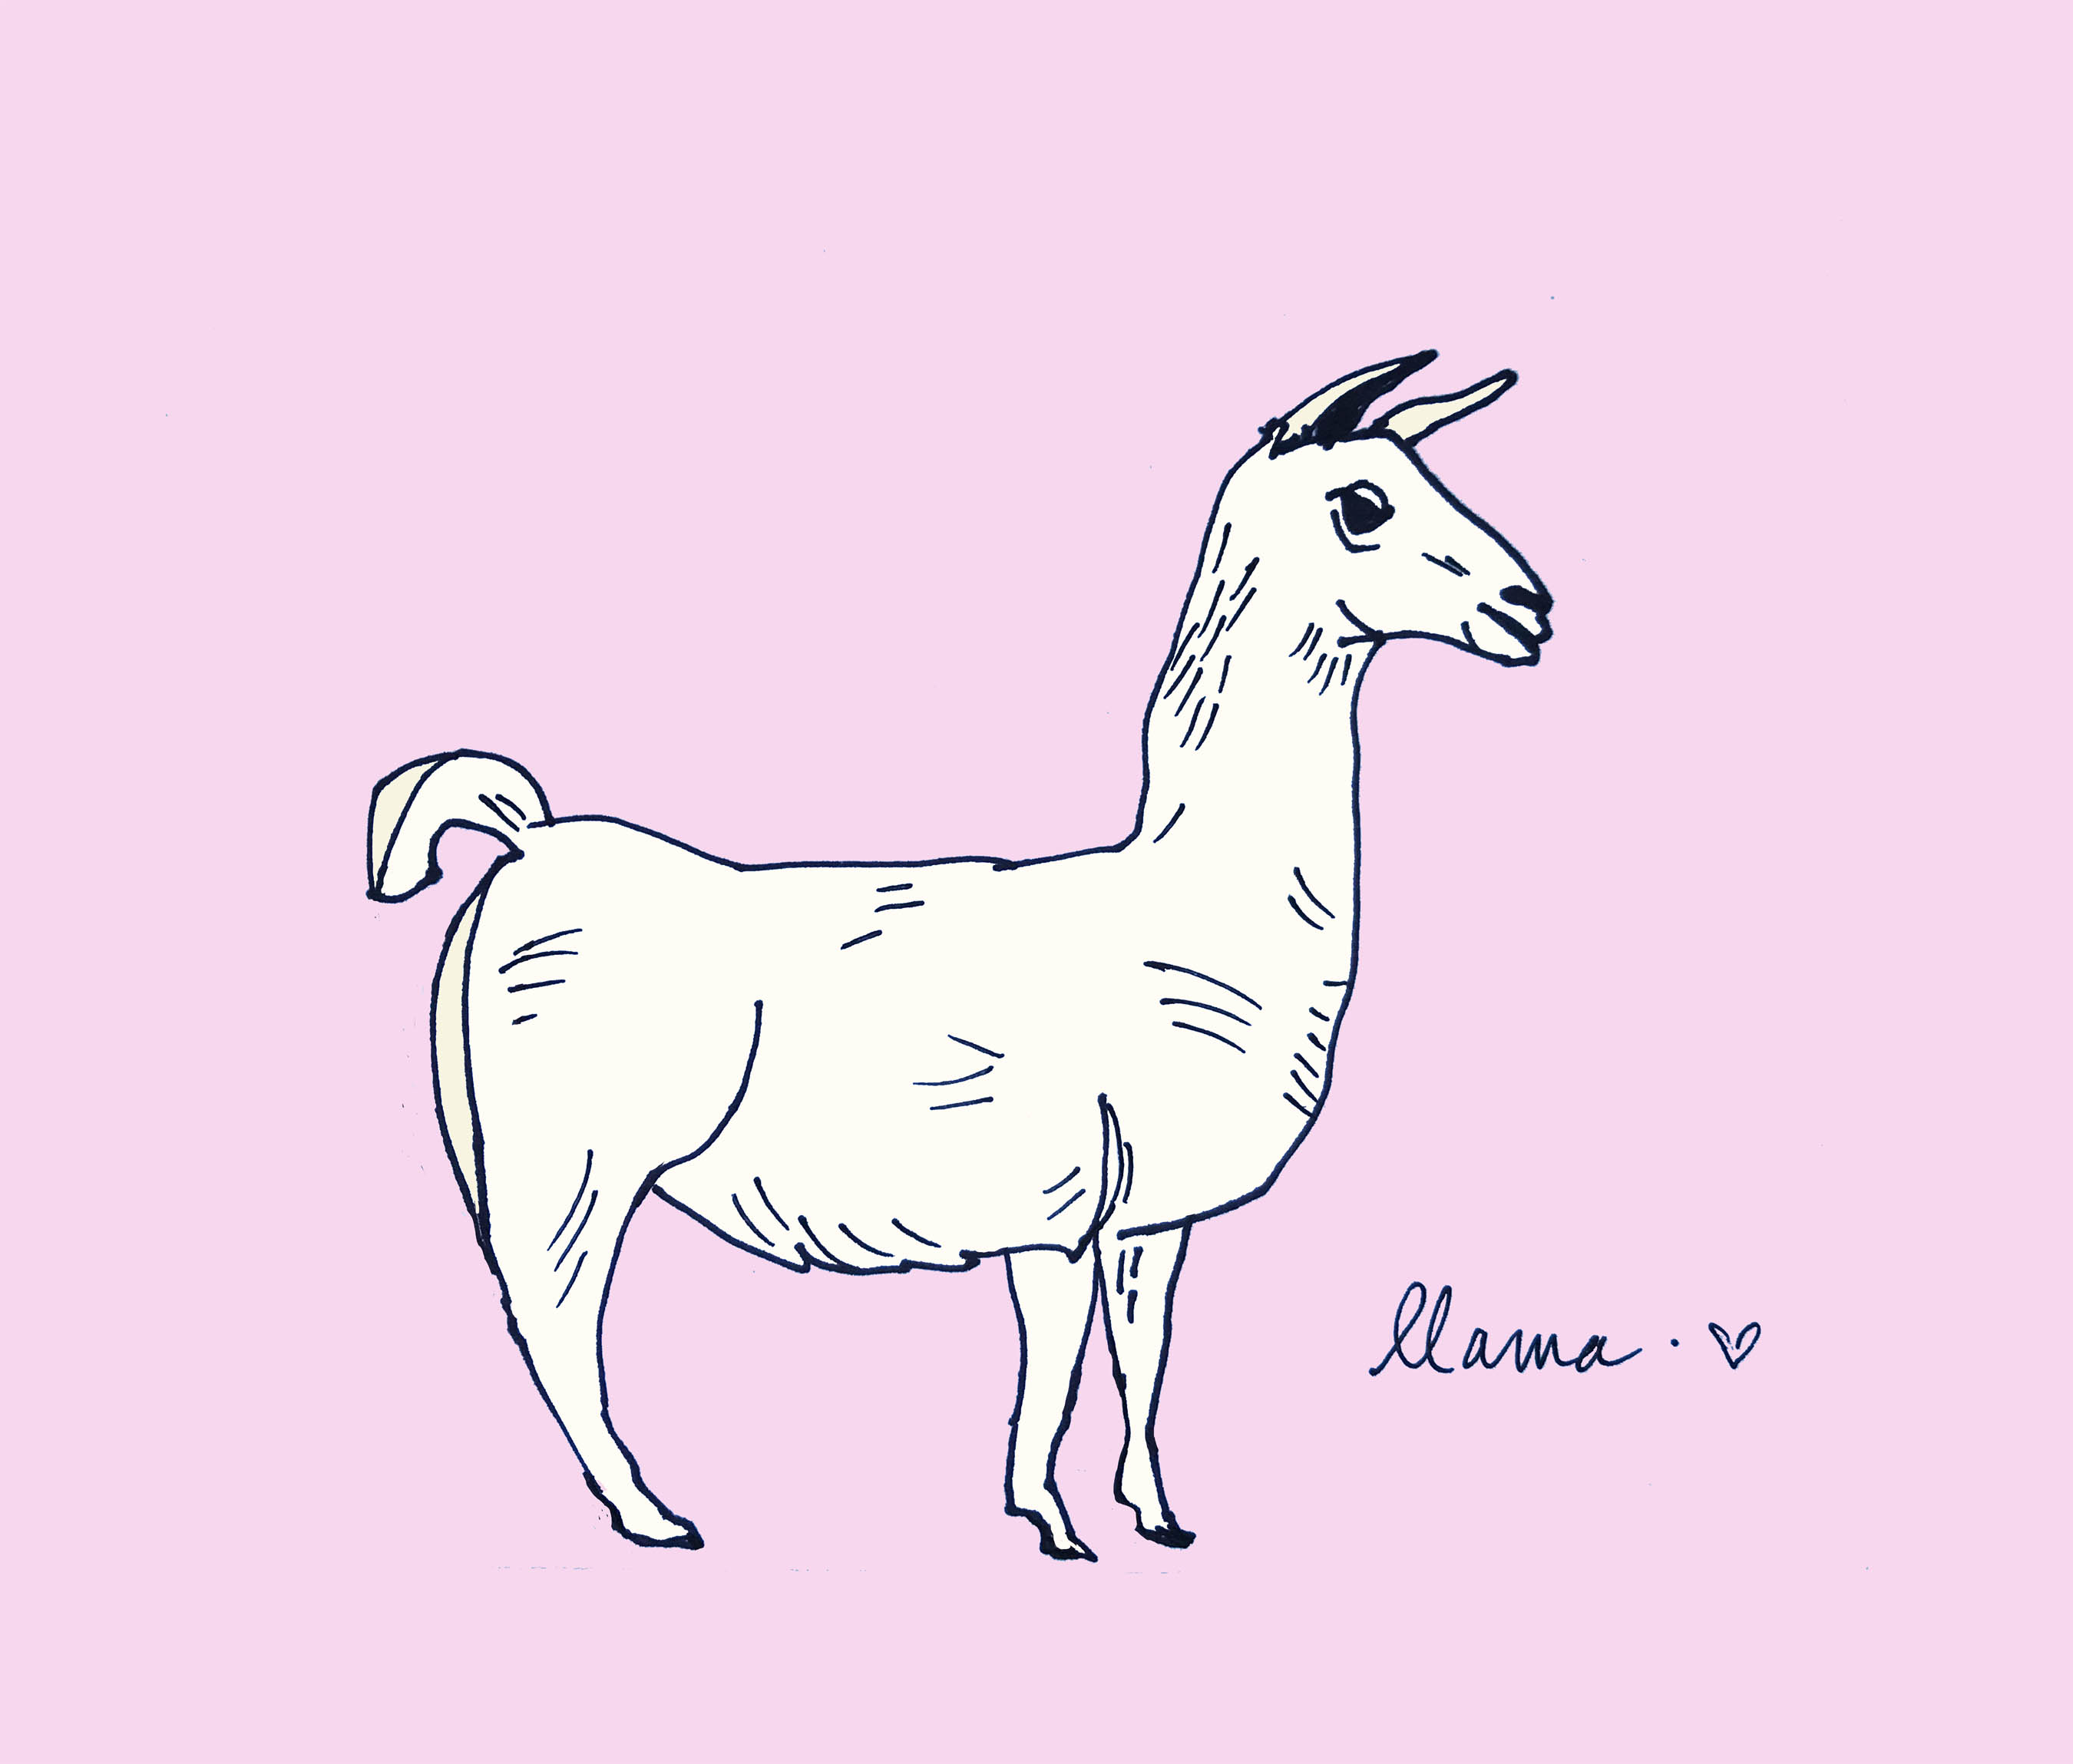 art every day number 411 / illustration / llama love